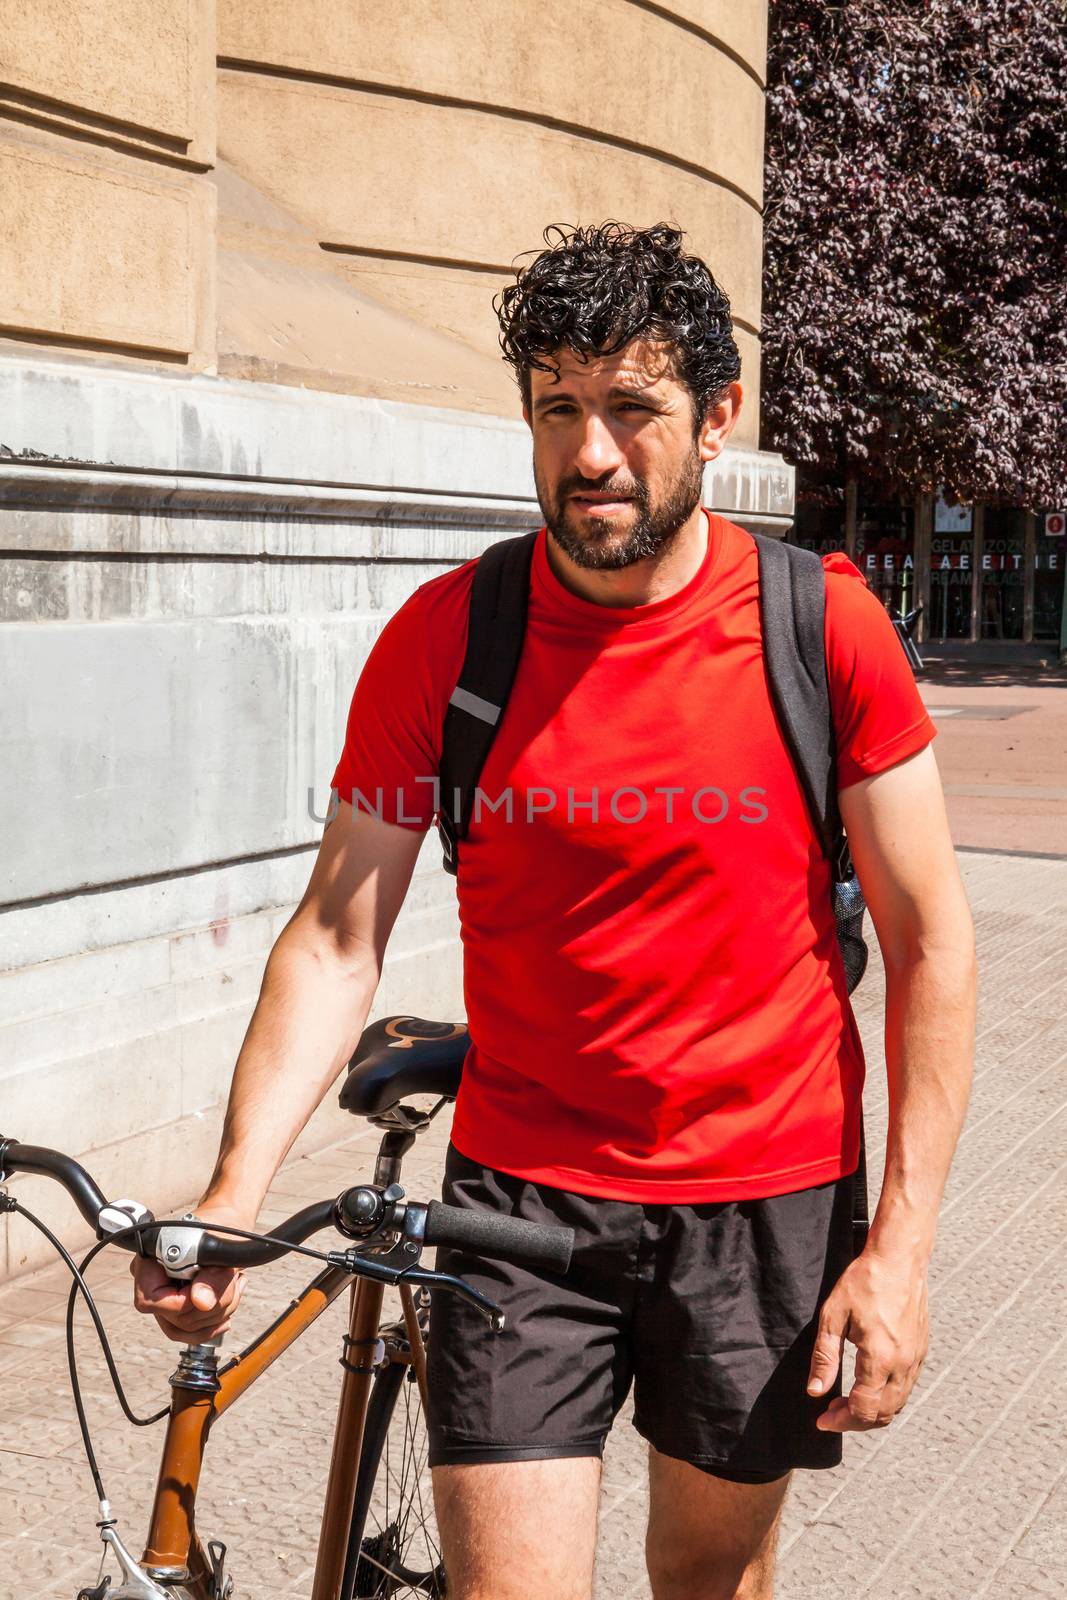 Urban athlete walking his bike through a city by andongob